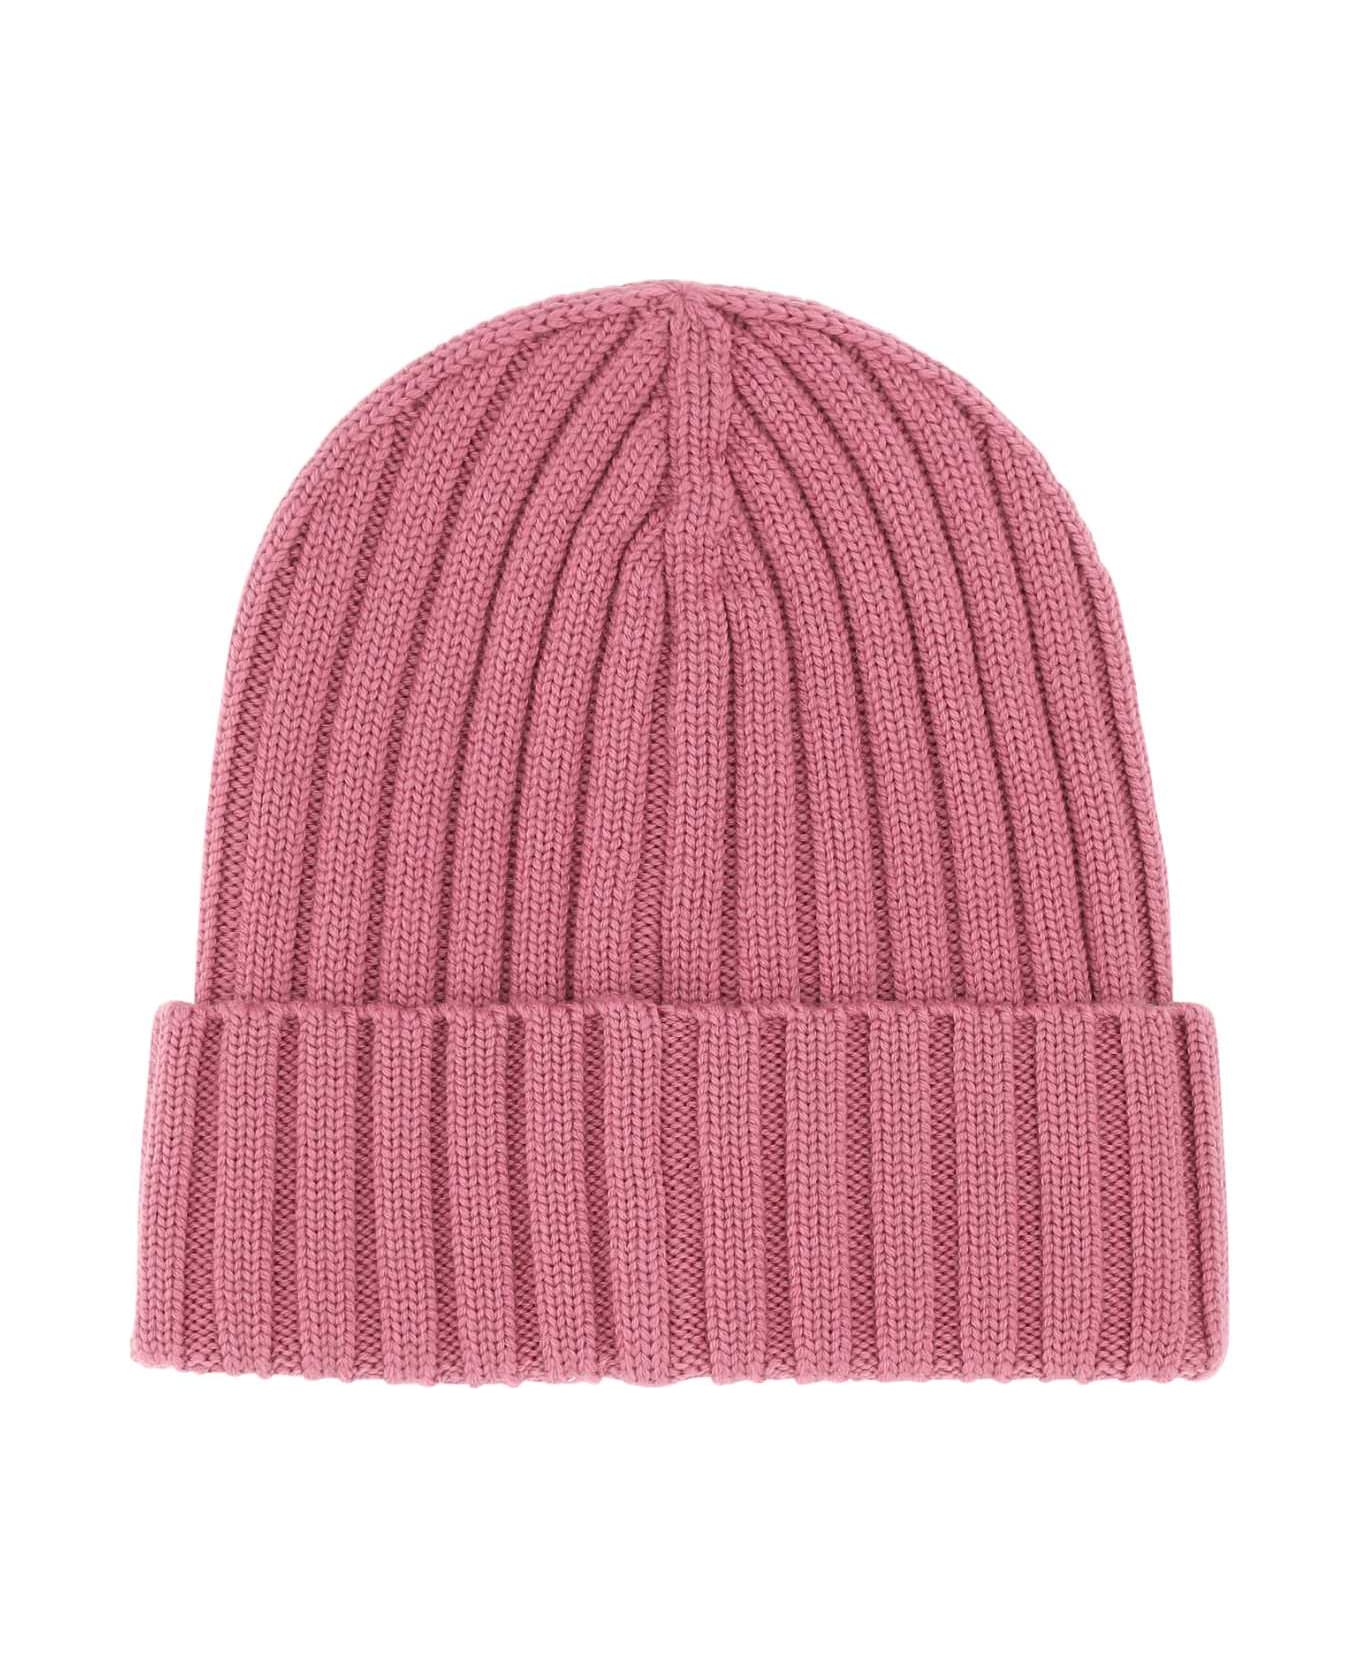 Moncler Antiqued Pink Wool Beanie Hat - PINK